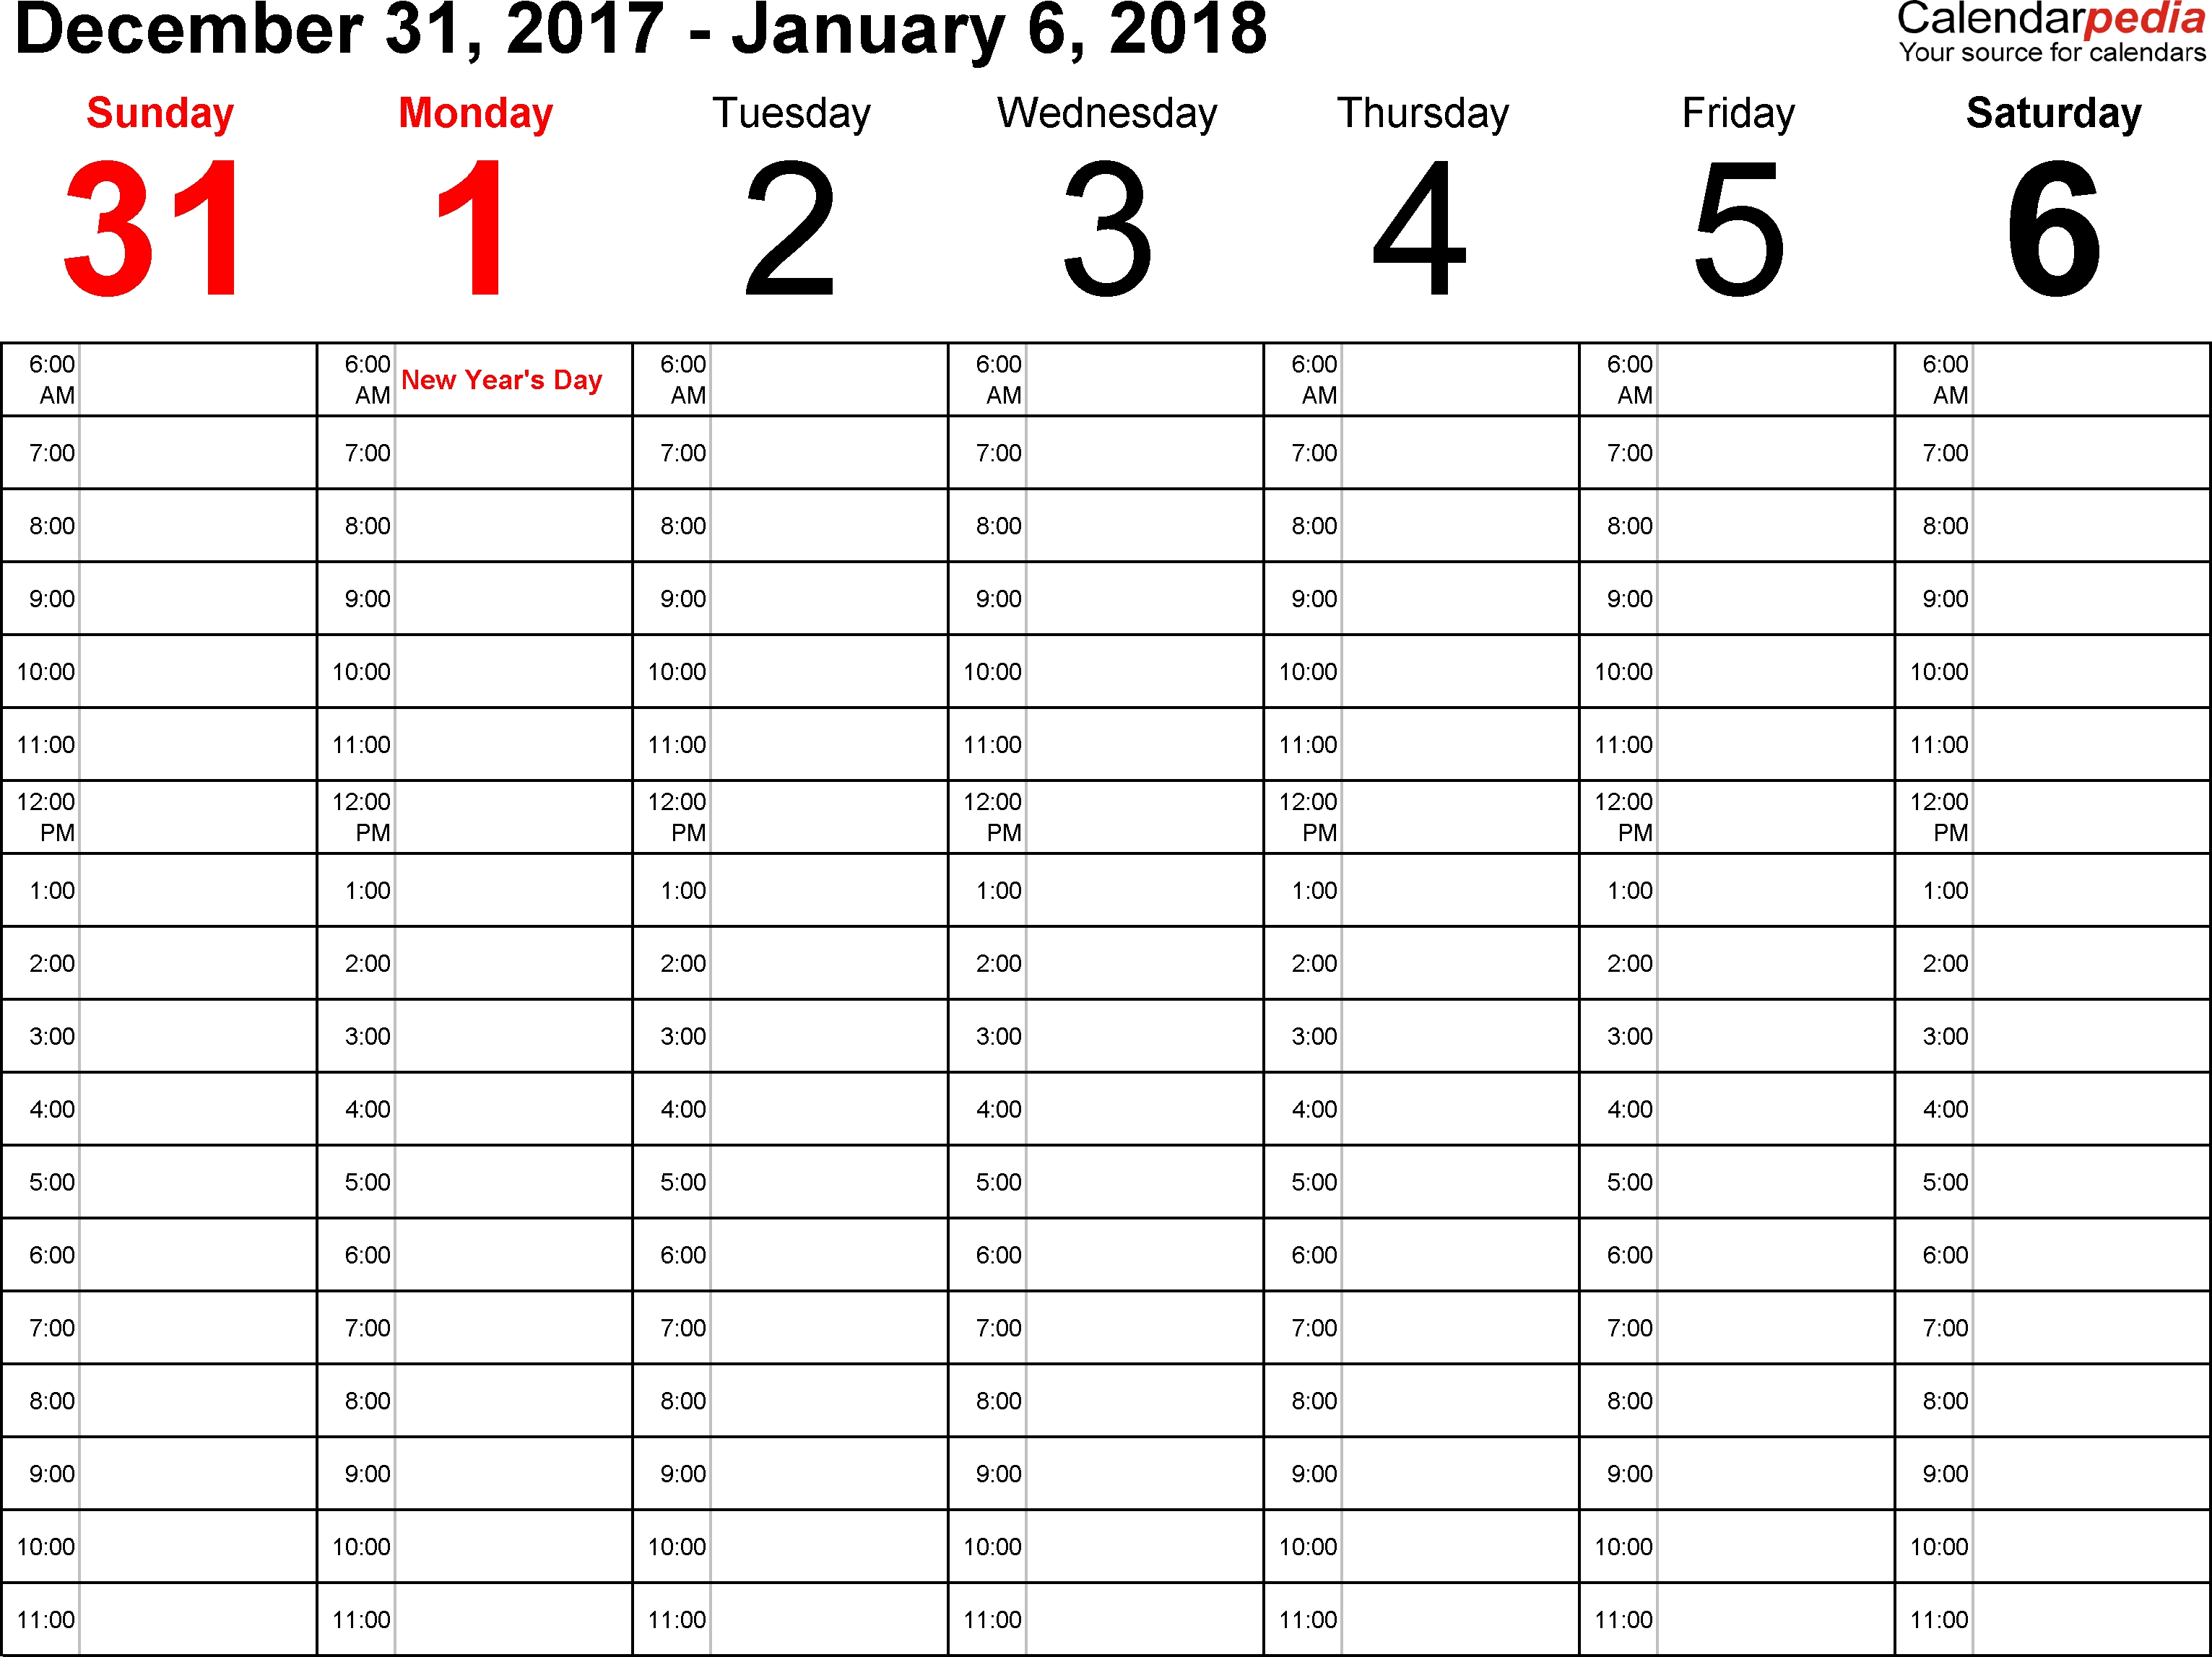 Weekly Calendar 2018 For Word - 12 Free Printable Templates within 1 Week Vacation Calendar Printable